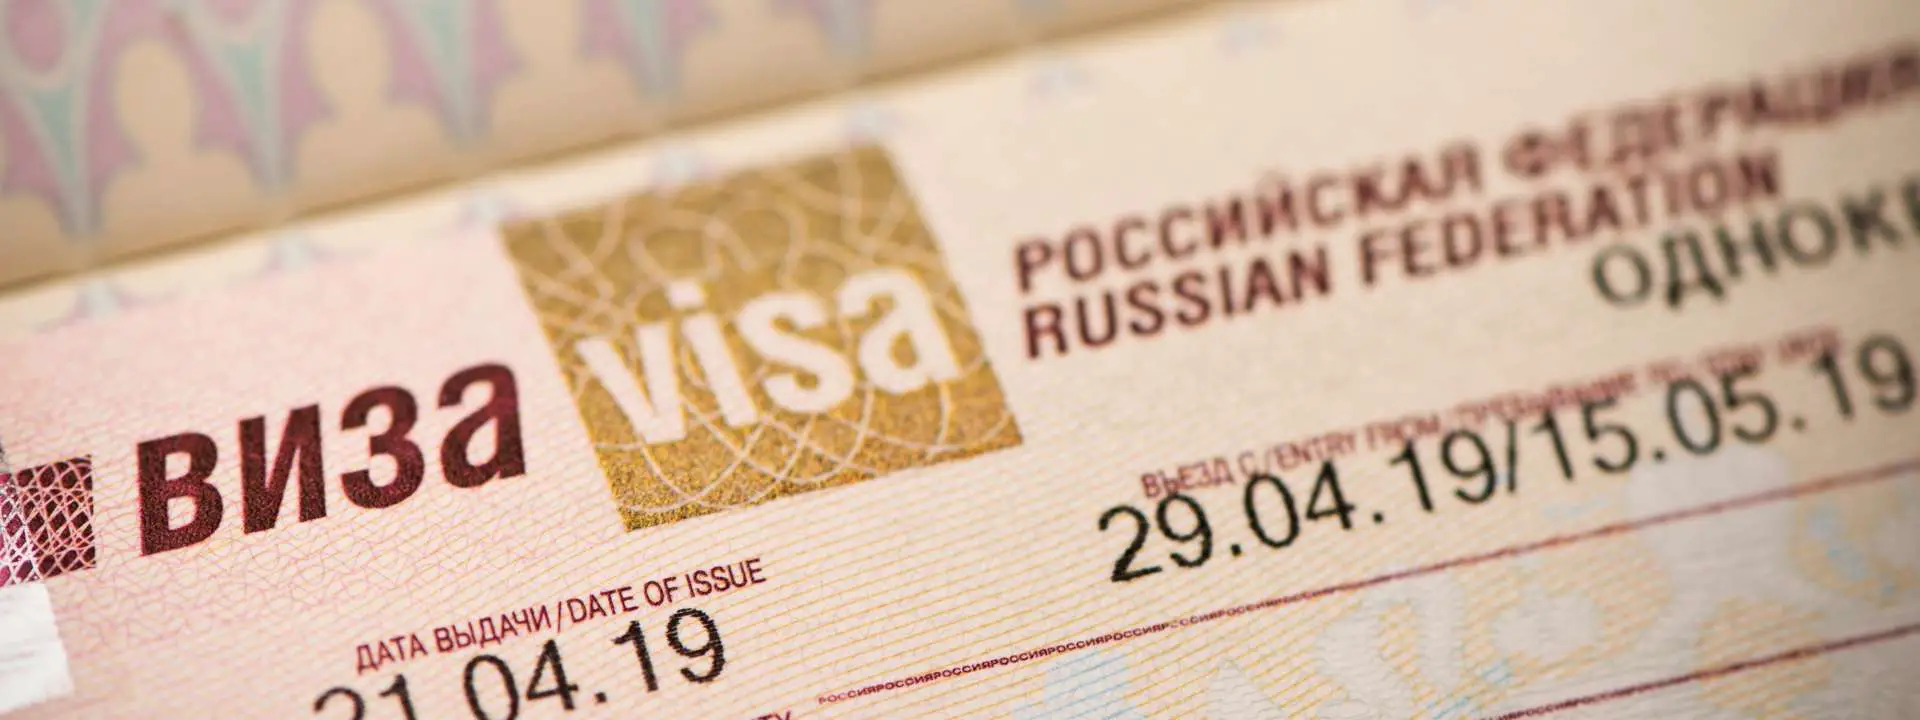 russia tourist visa from qatar